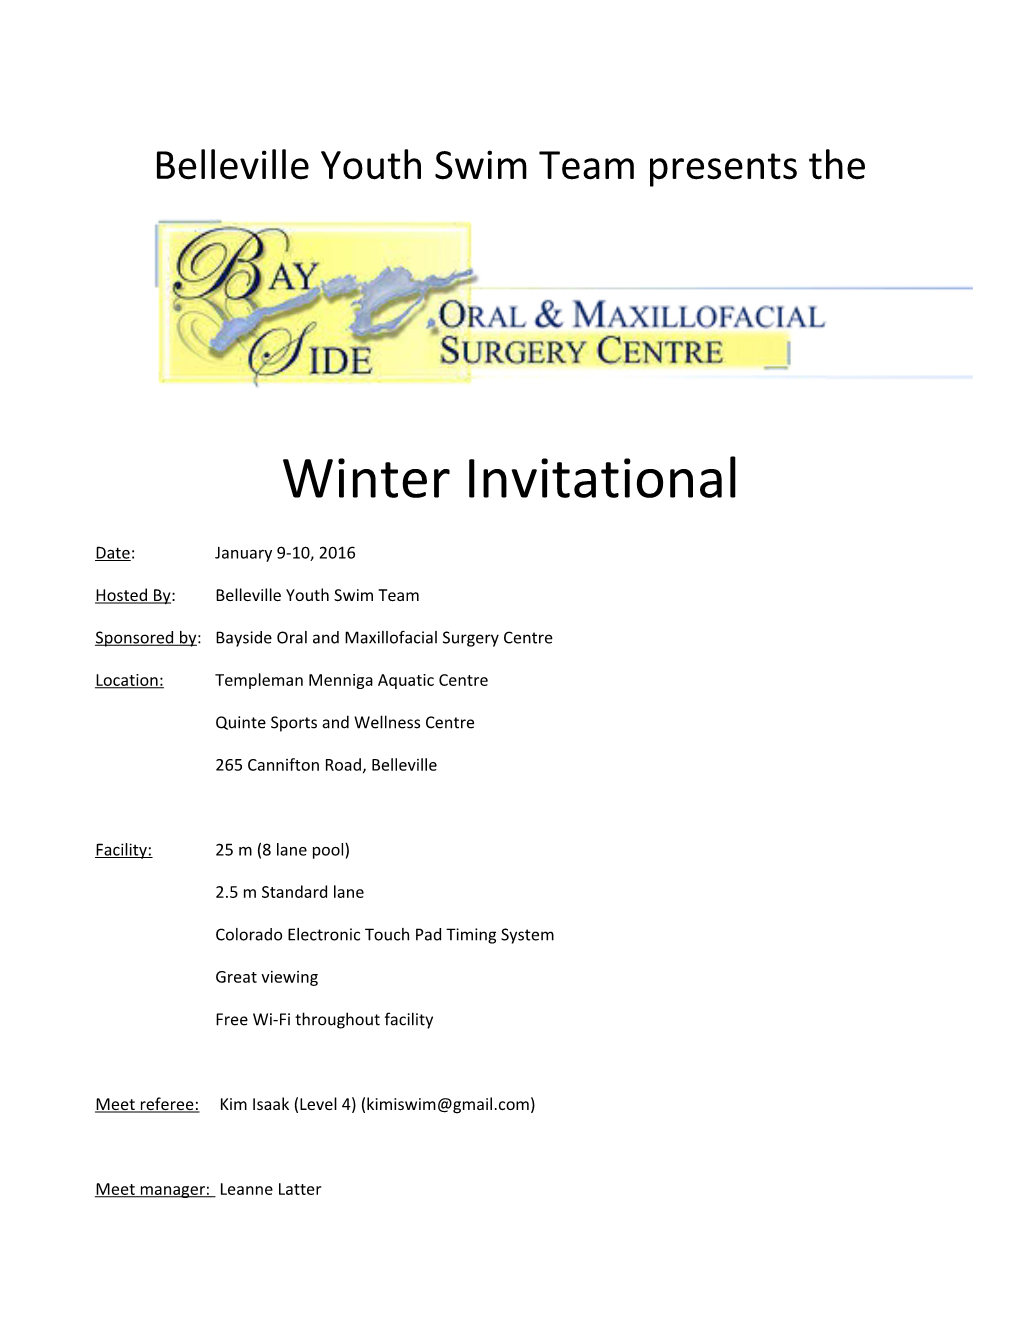 Belleville Youth Swim Team Presents The